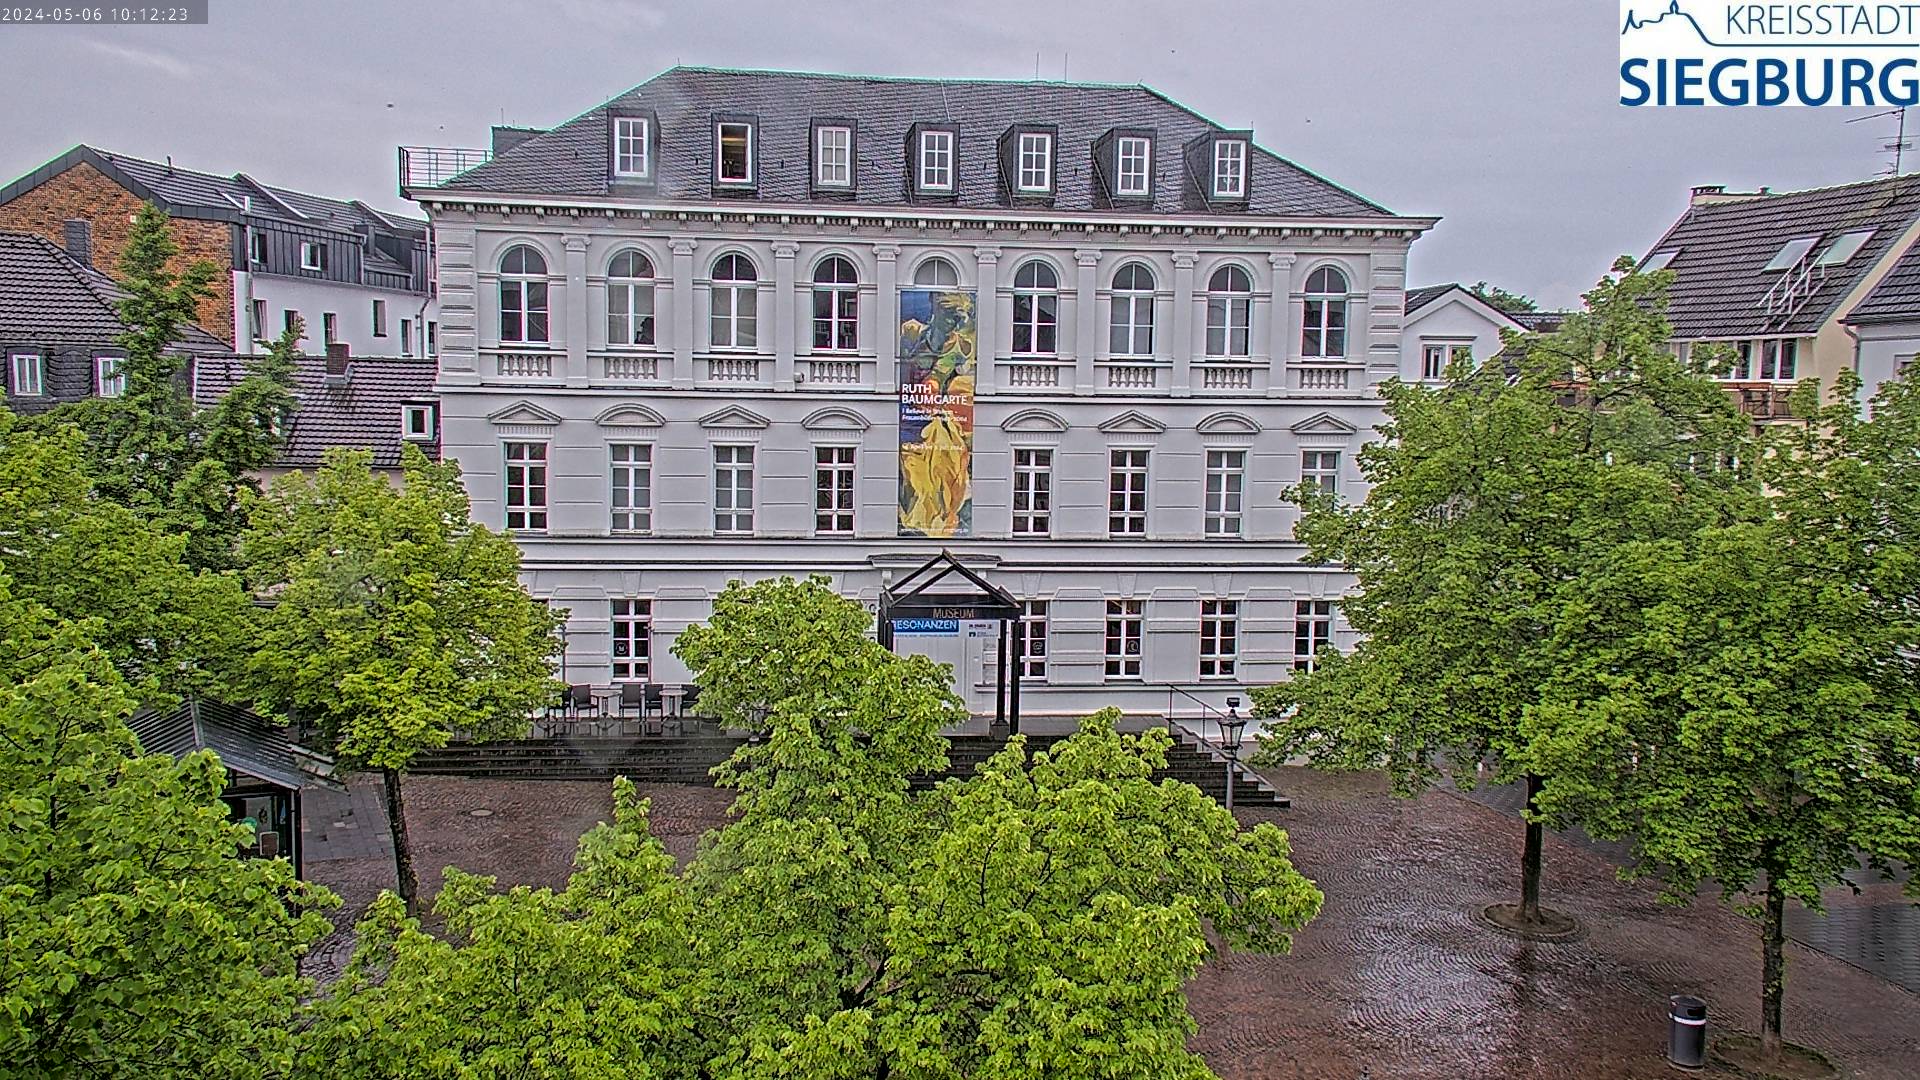 Blick auf das Siegburger Stadtmuseum